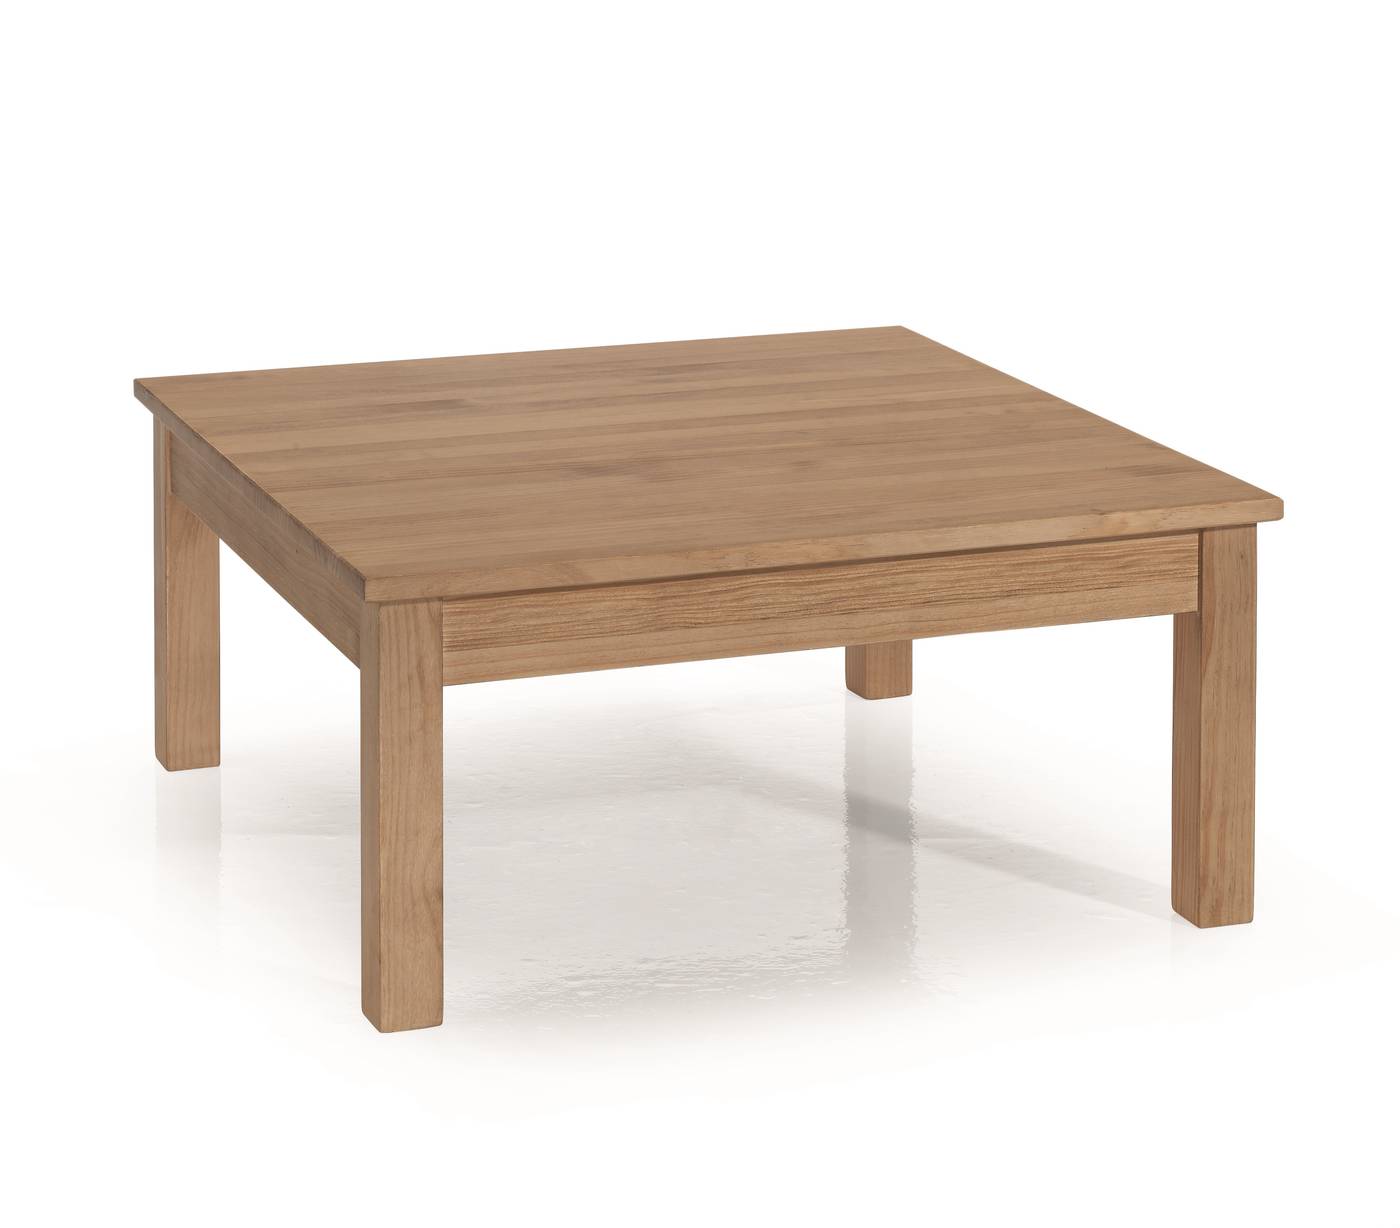 Mesa de centro cuadrada, con patas rectas de madera. Fabricada de madera de pino maciza en varios colores.